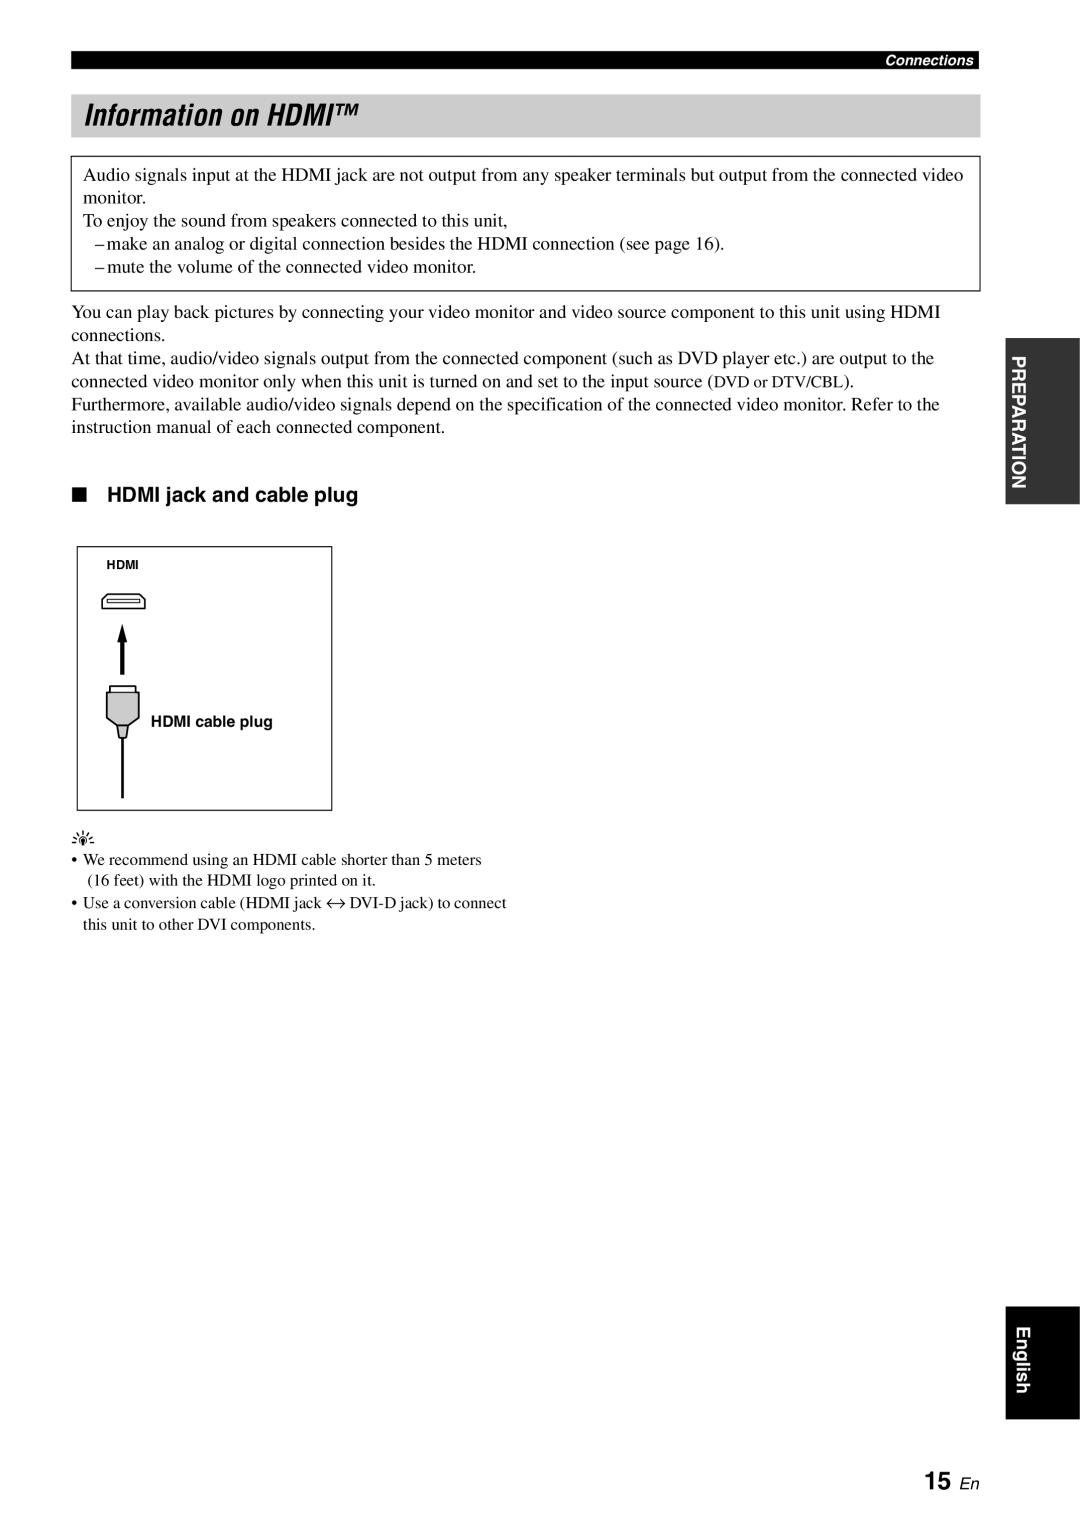 Yamaha RX-V561 owner manual Information on HDMI, 15 En, HDMI jack and cable plug 